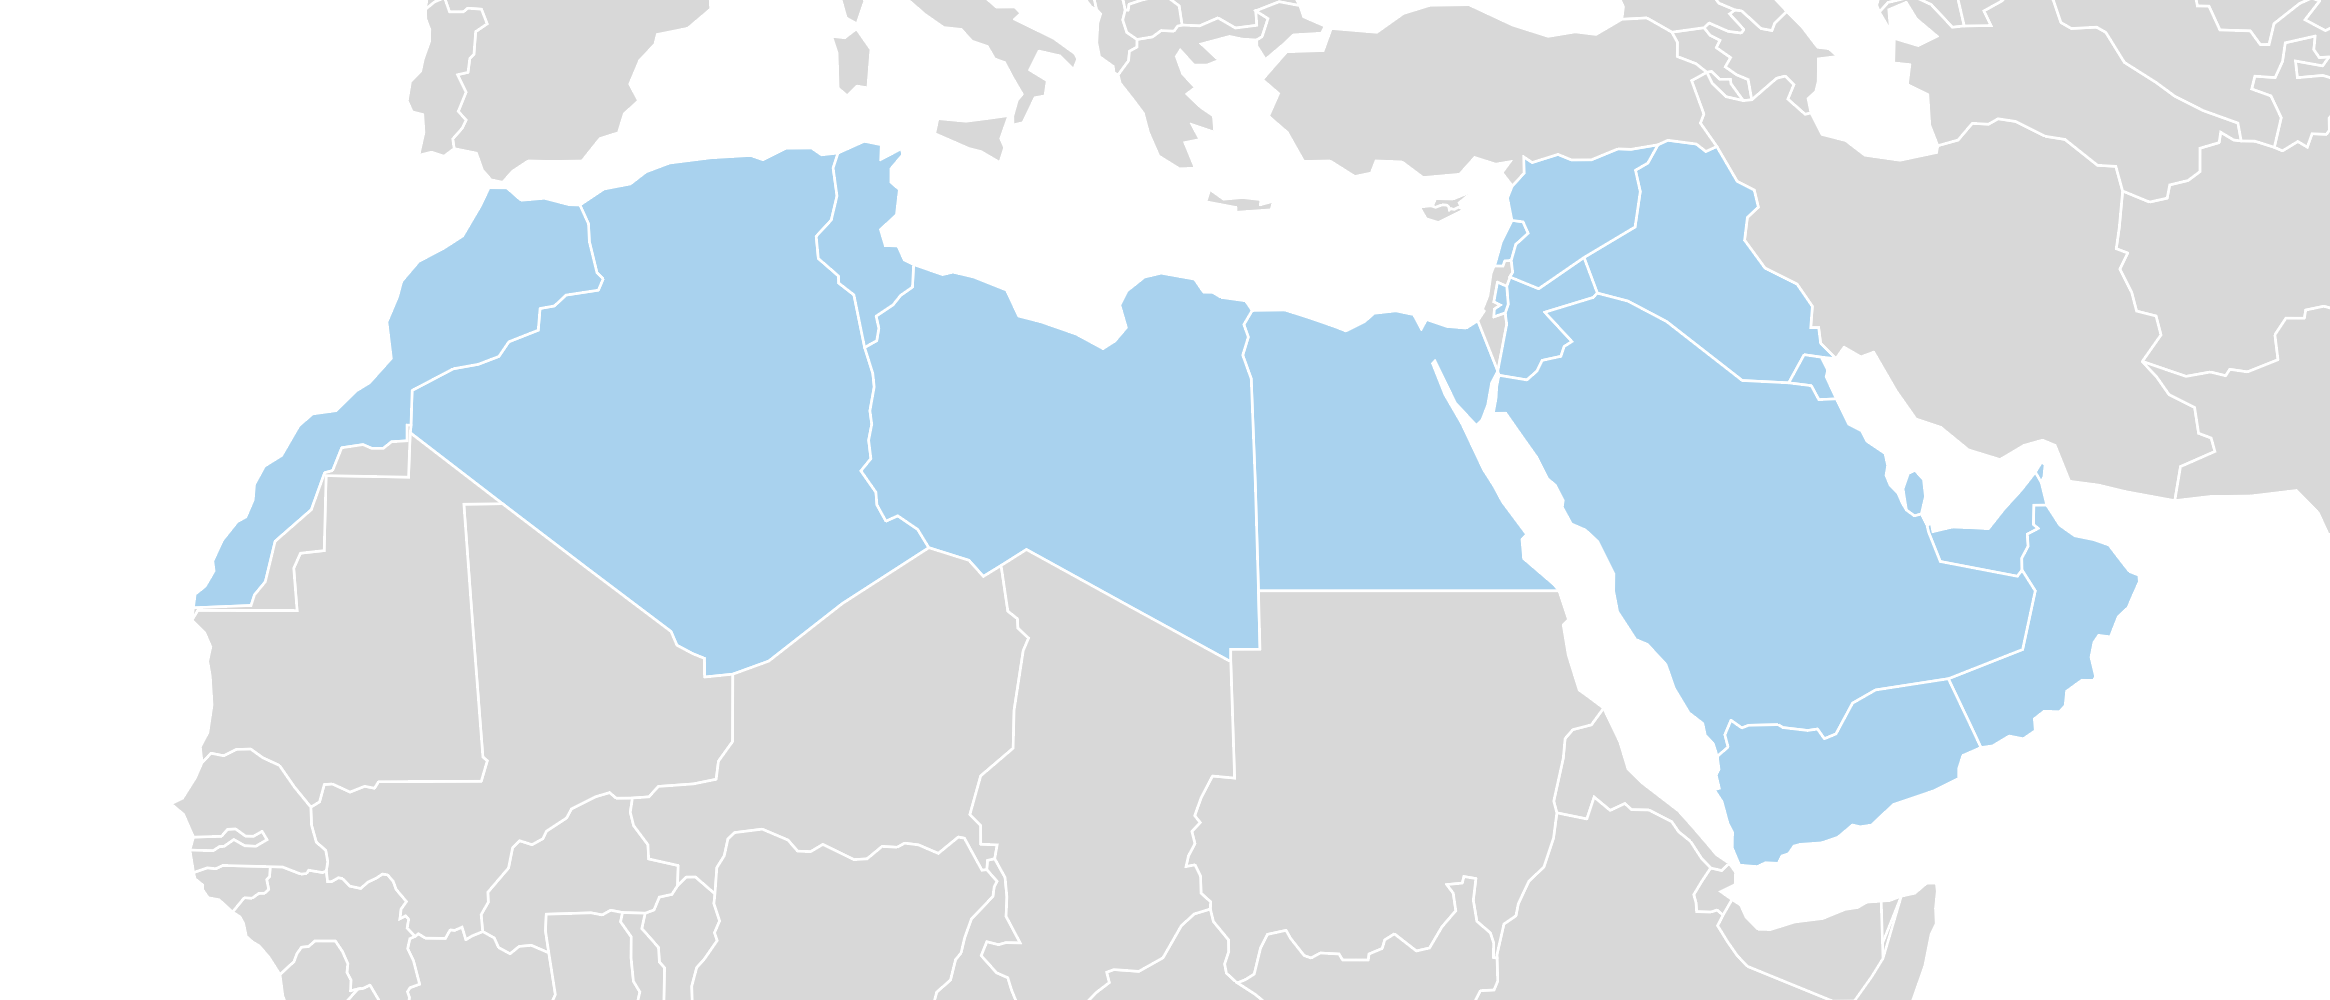  GenTrack Arab States